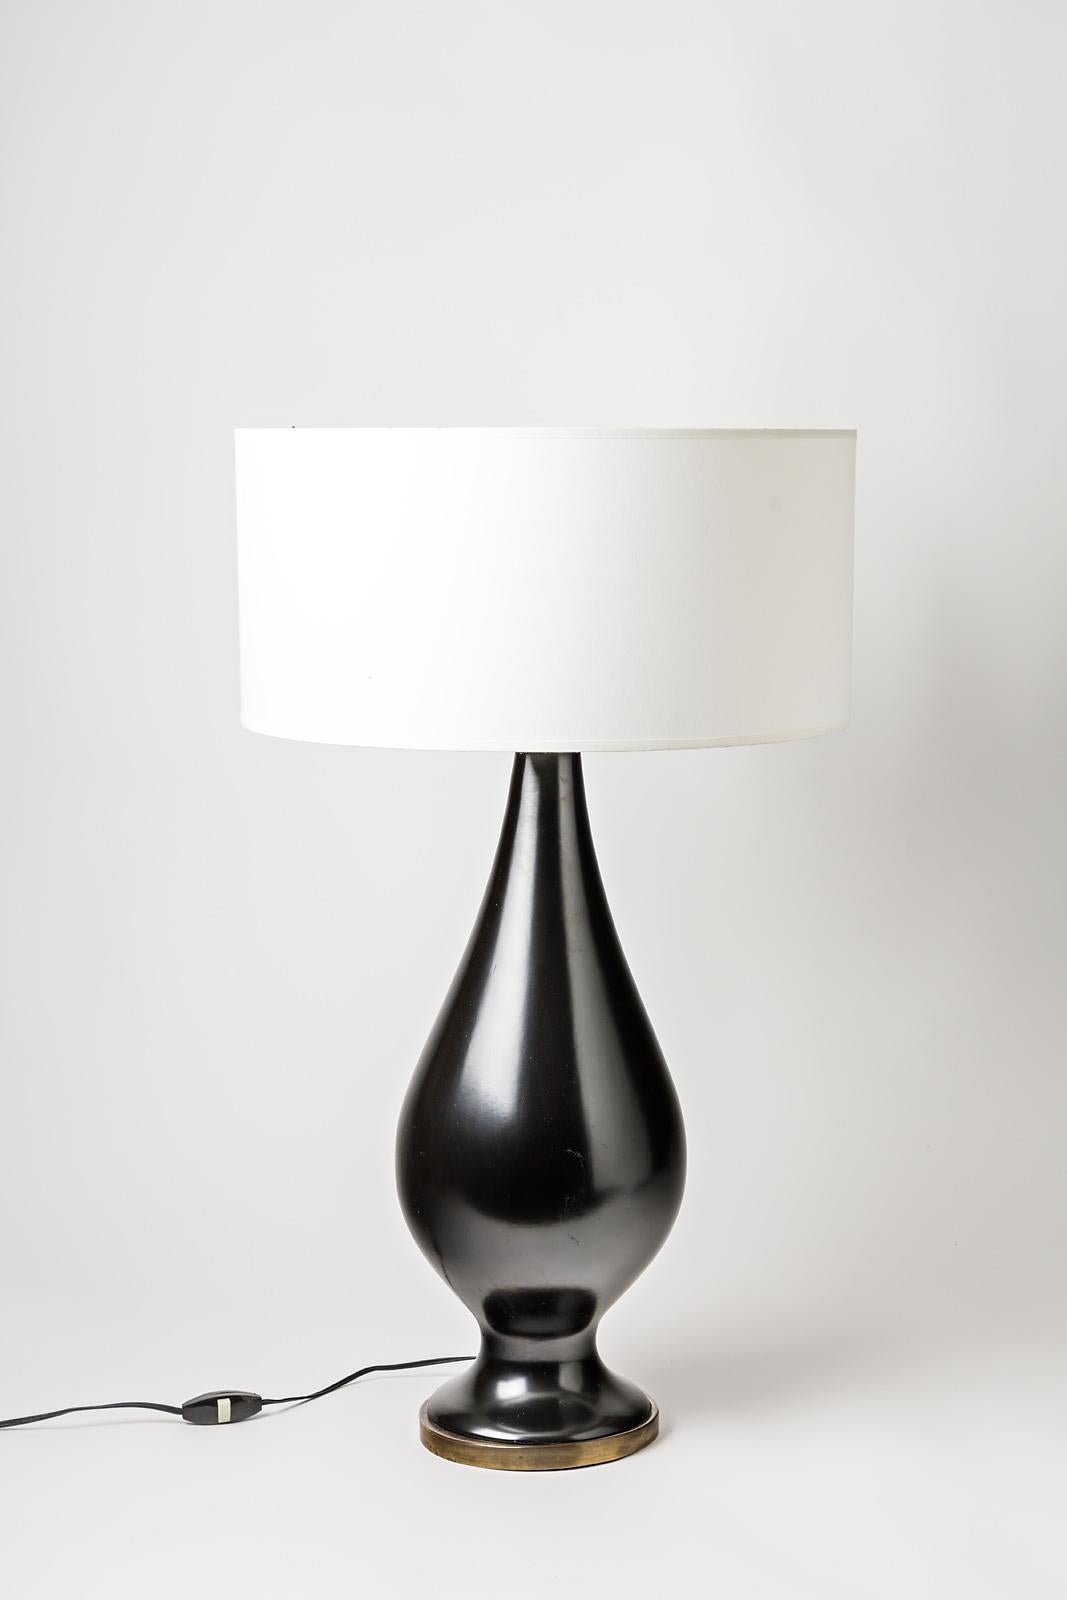 French Shinny Black Ceramic Table Lamp Modern 20th Century Freeform Light